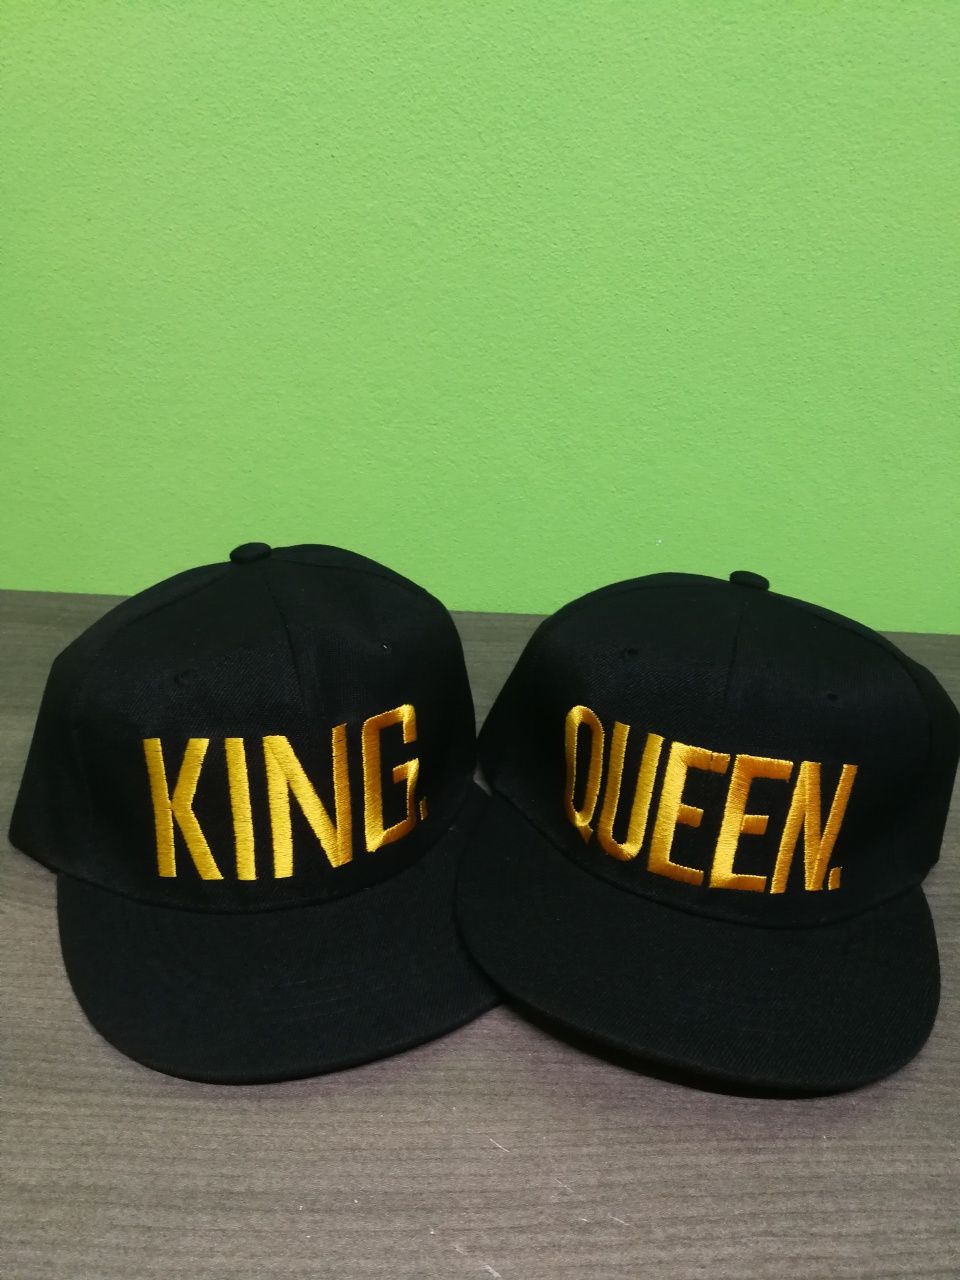 Bonés Queen (cap king não disponível)